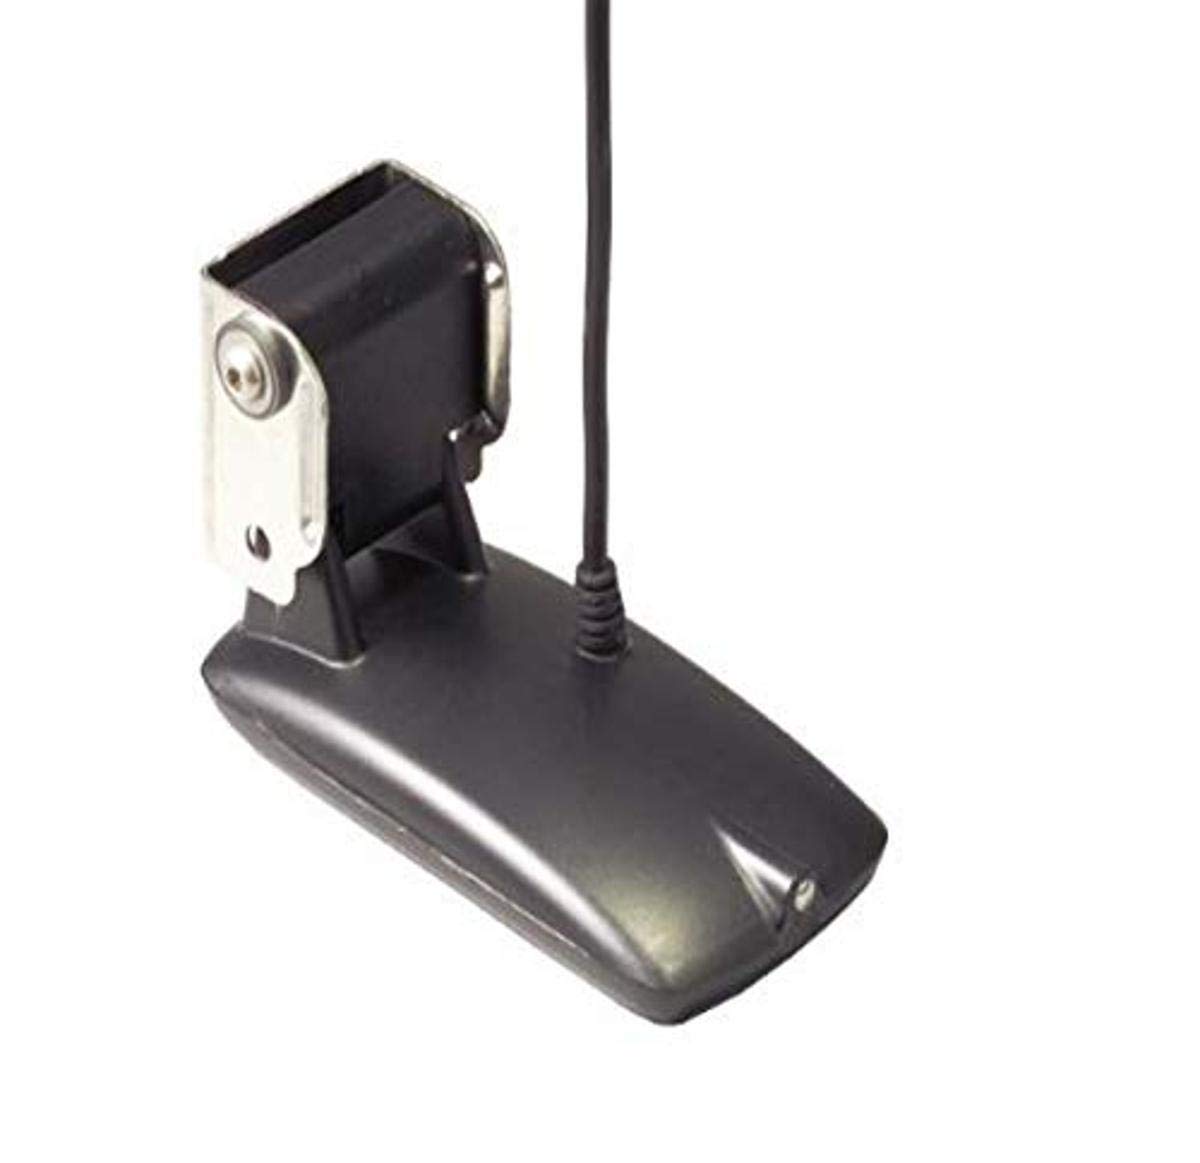 Humminbird 710201-1 Датчик XHS 9 HDSI 180 T (HD Side Imaging) для крепления на транце